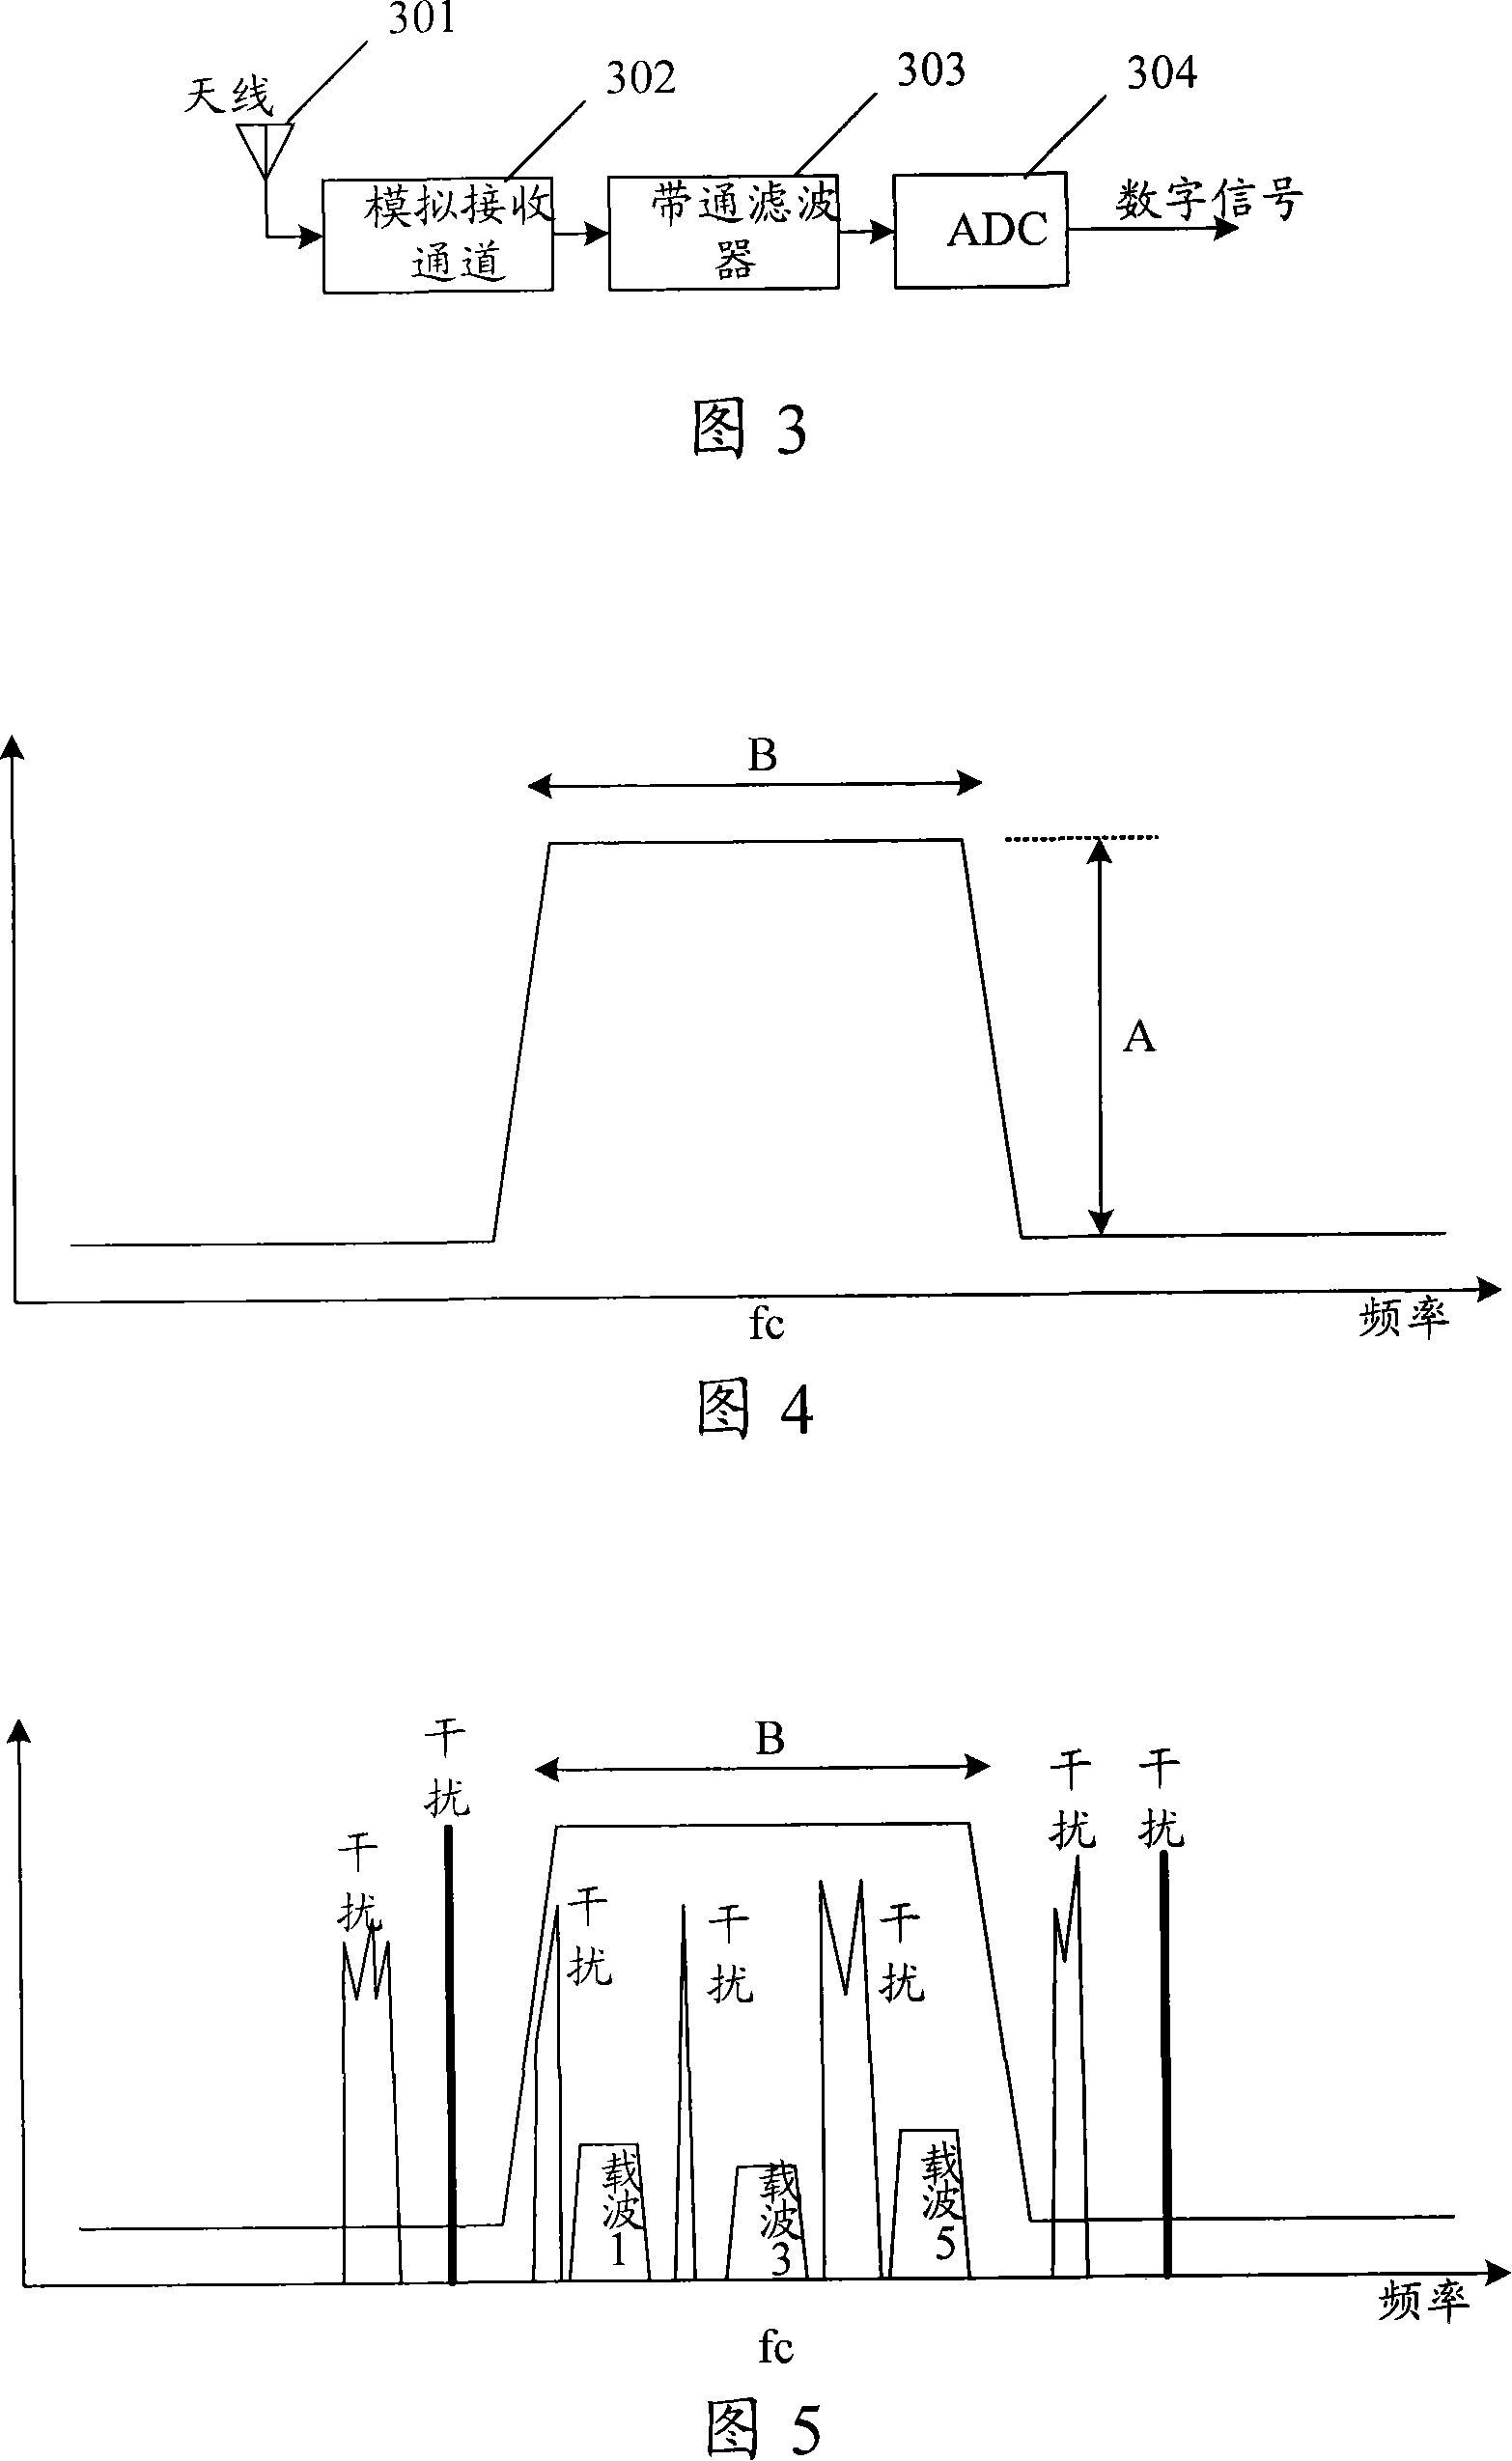 Anti-interference method in receiver, anti-interference receiver and anti-interference device